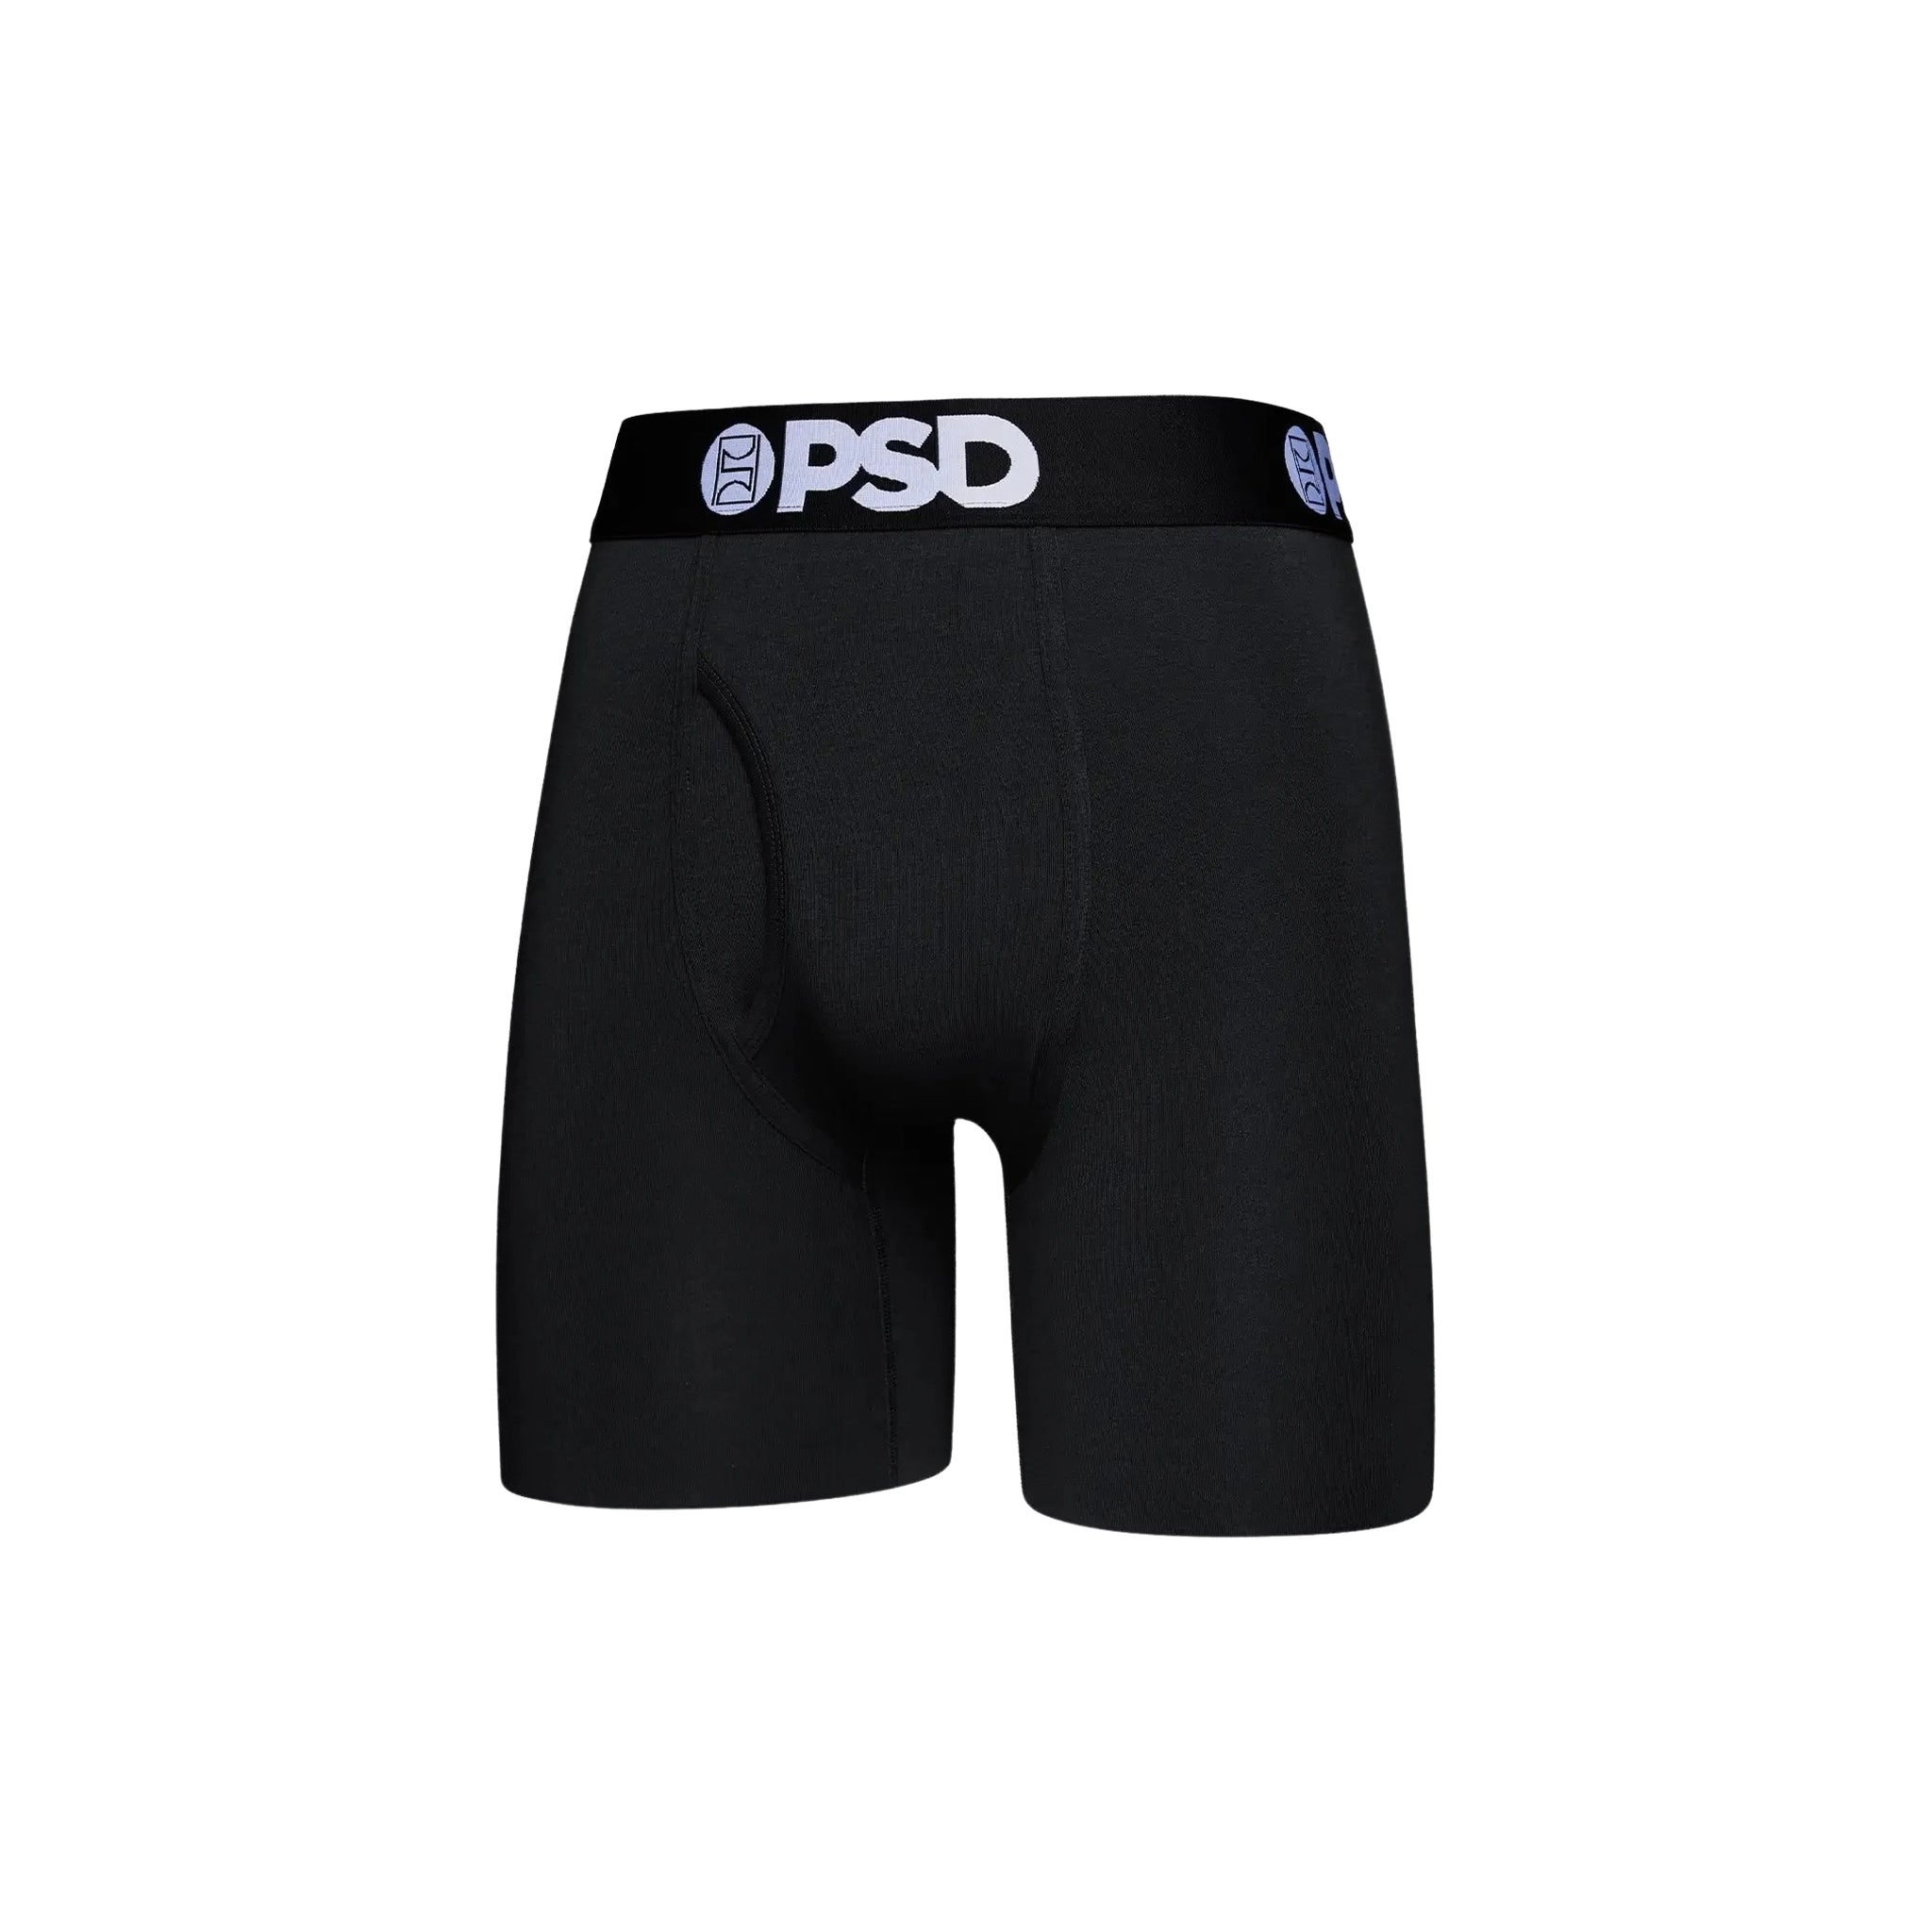 PSD "Modal Solids Black" Underwear